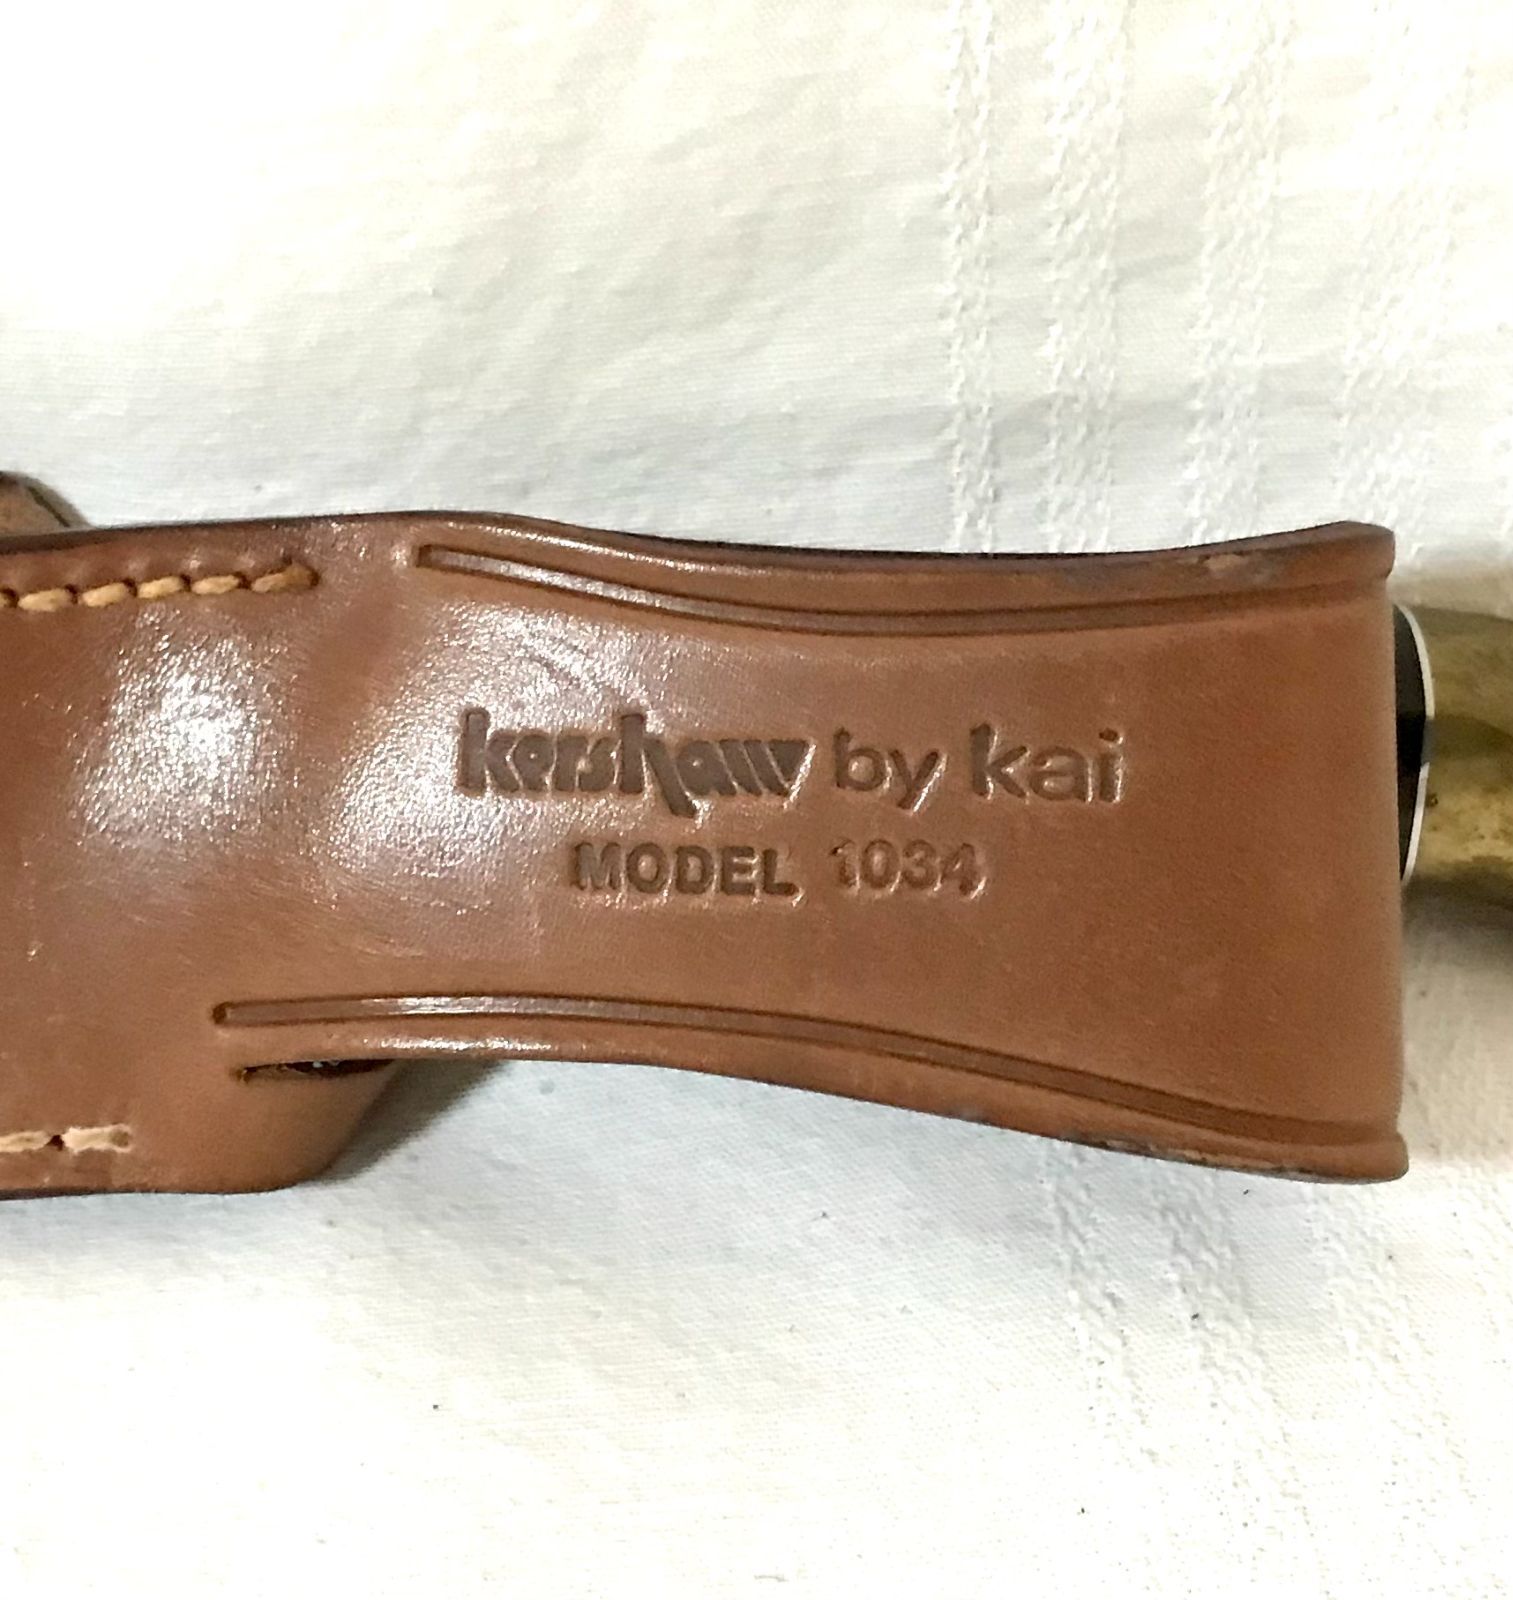 kershaw by kai OUTDOOR KNIFE ビンテージ カーショウ モデル 皮